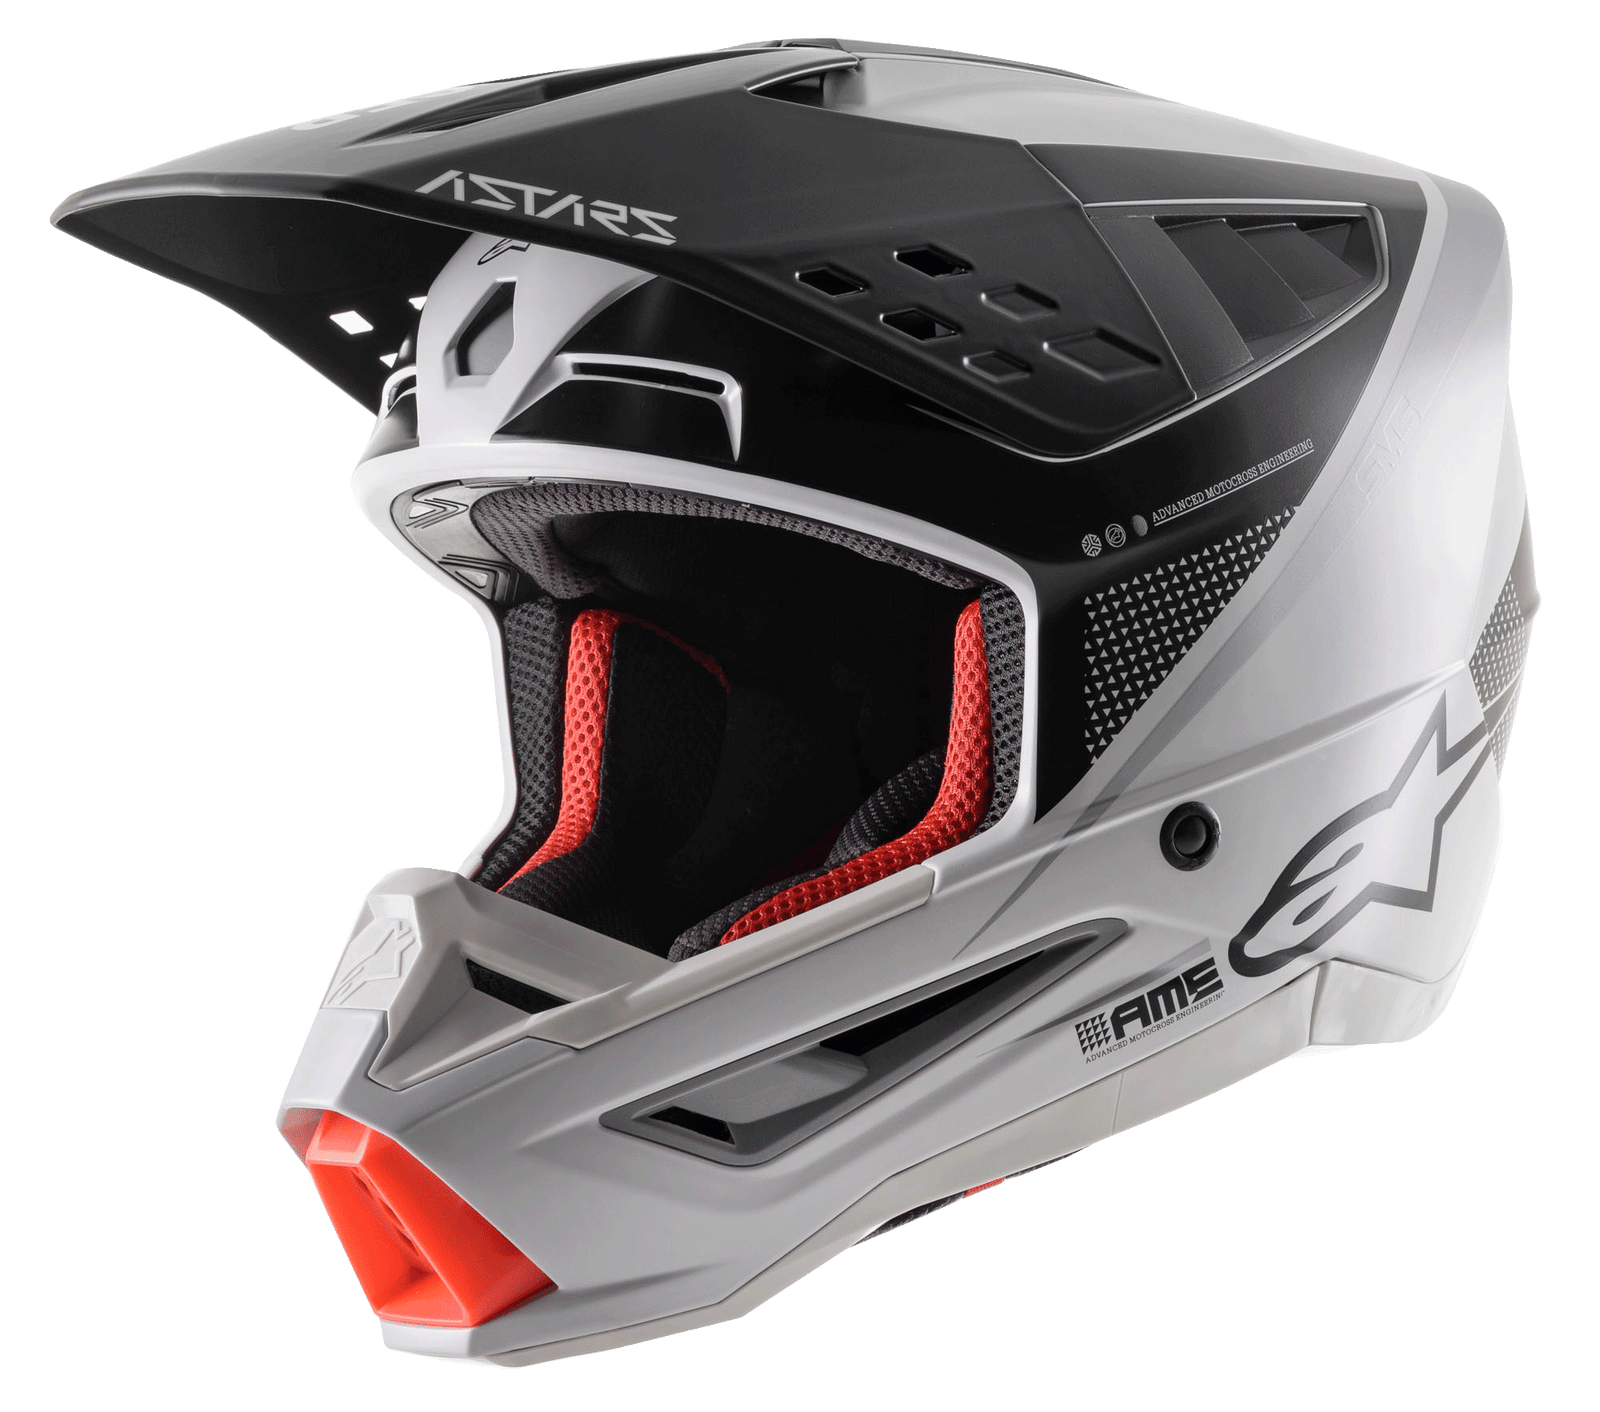 SM5 Rayon Helmet